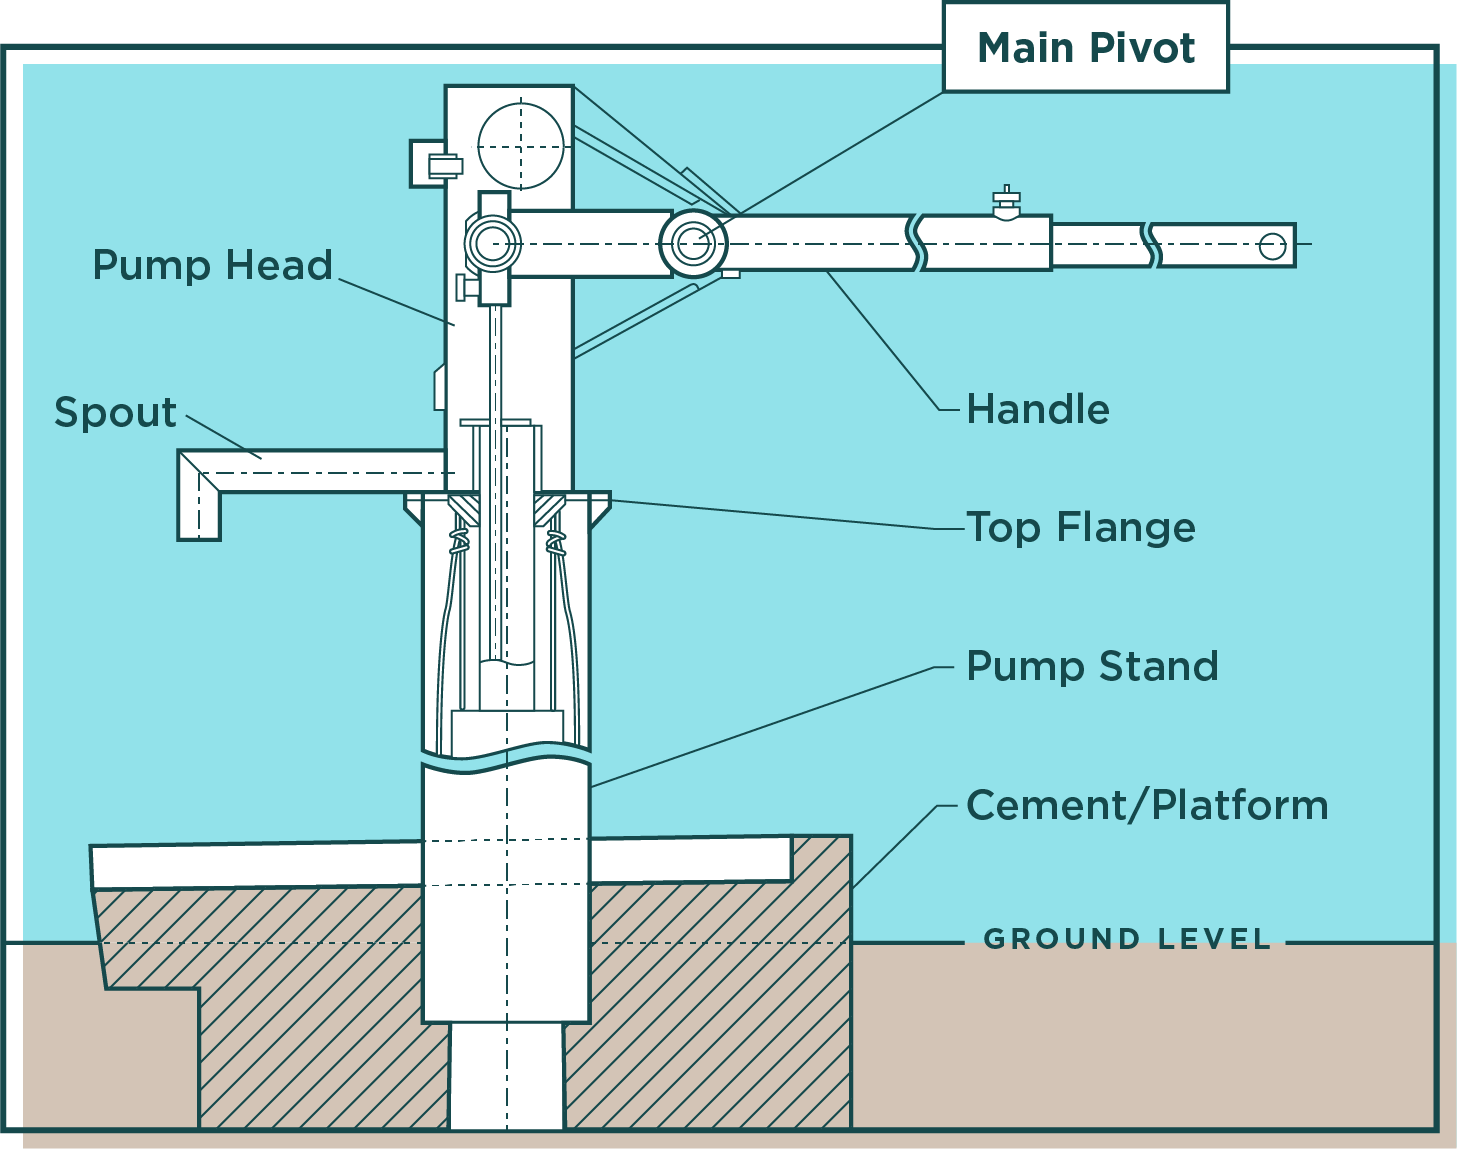 Figure 2: Afridev Water Pump Showing Main Pivot on Pump Handle